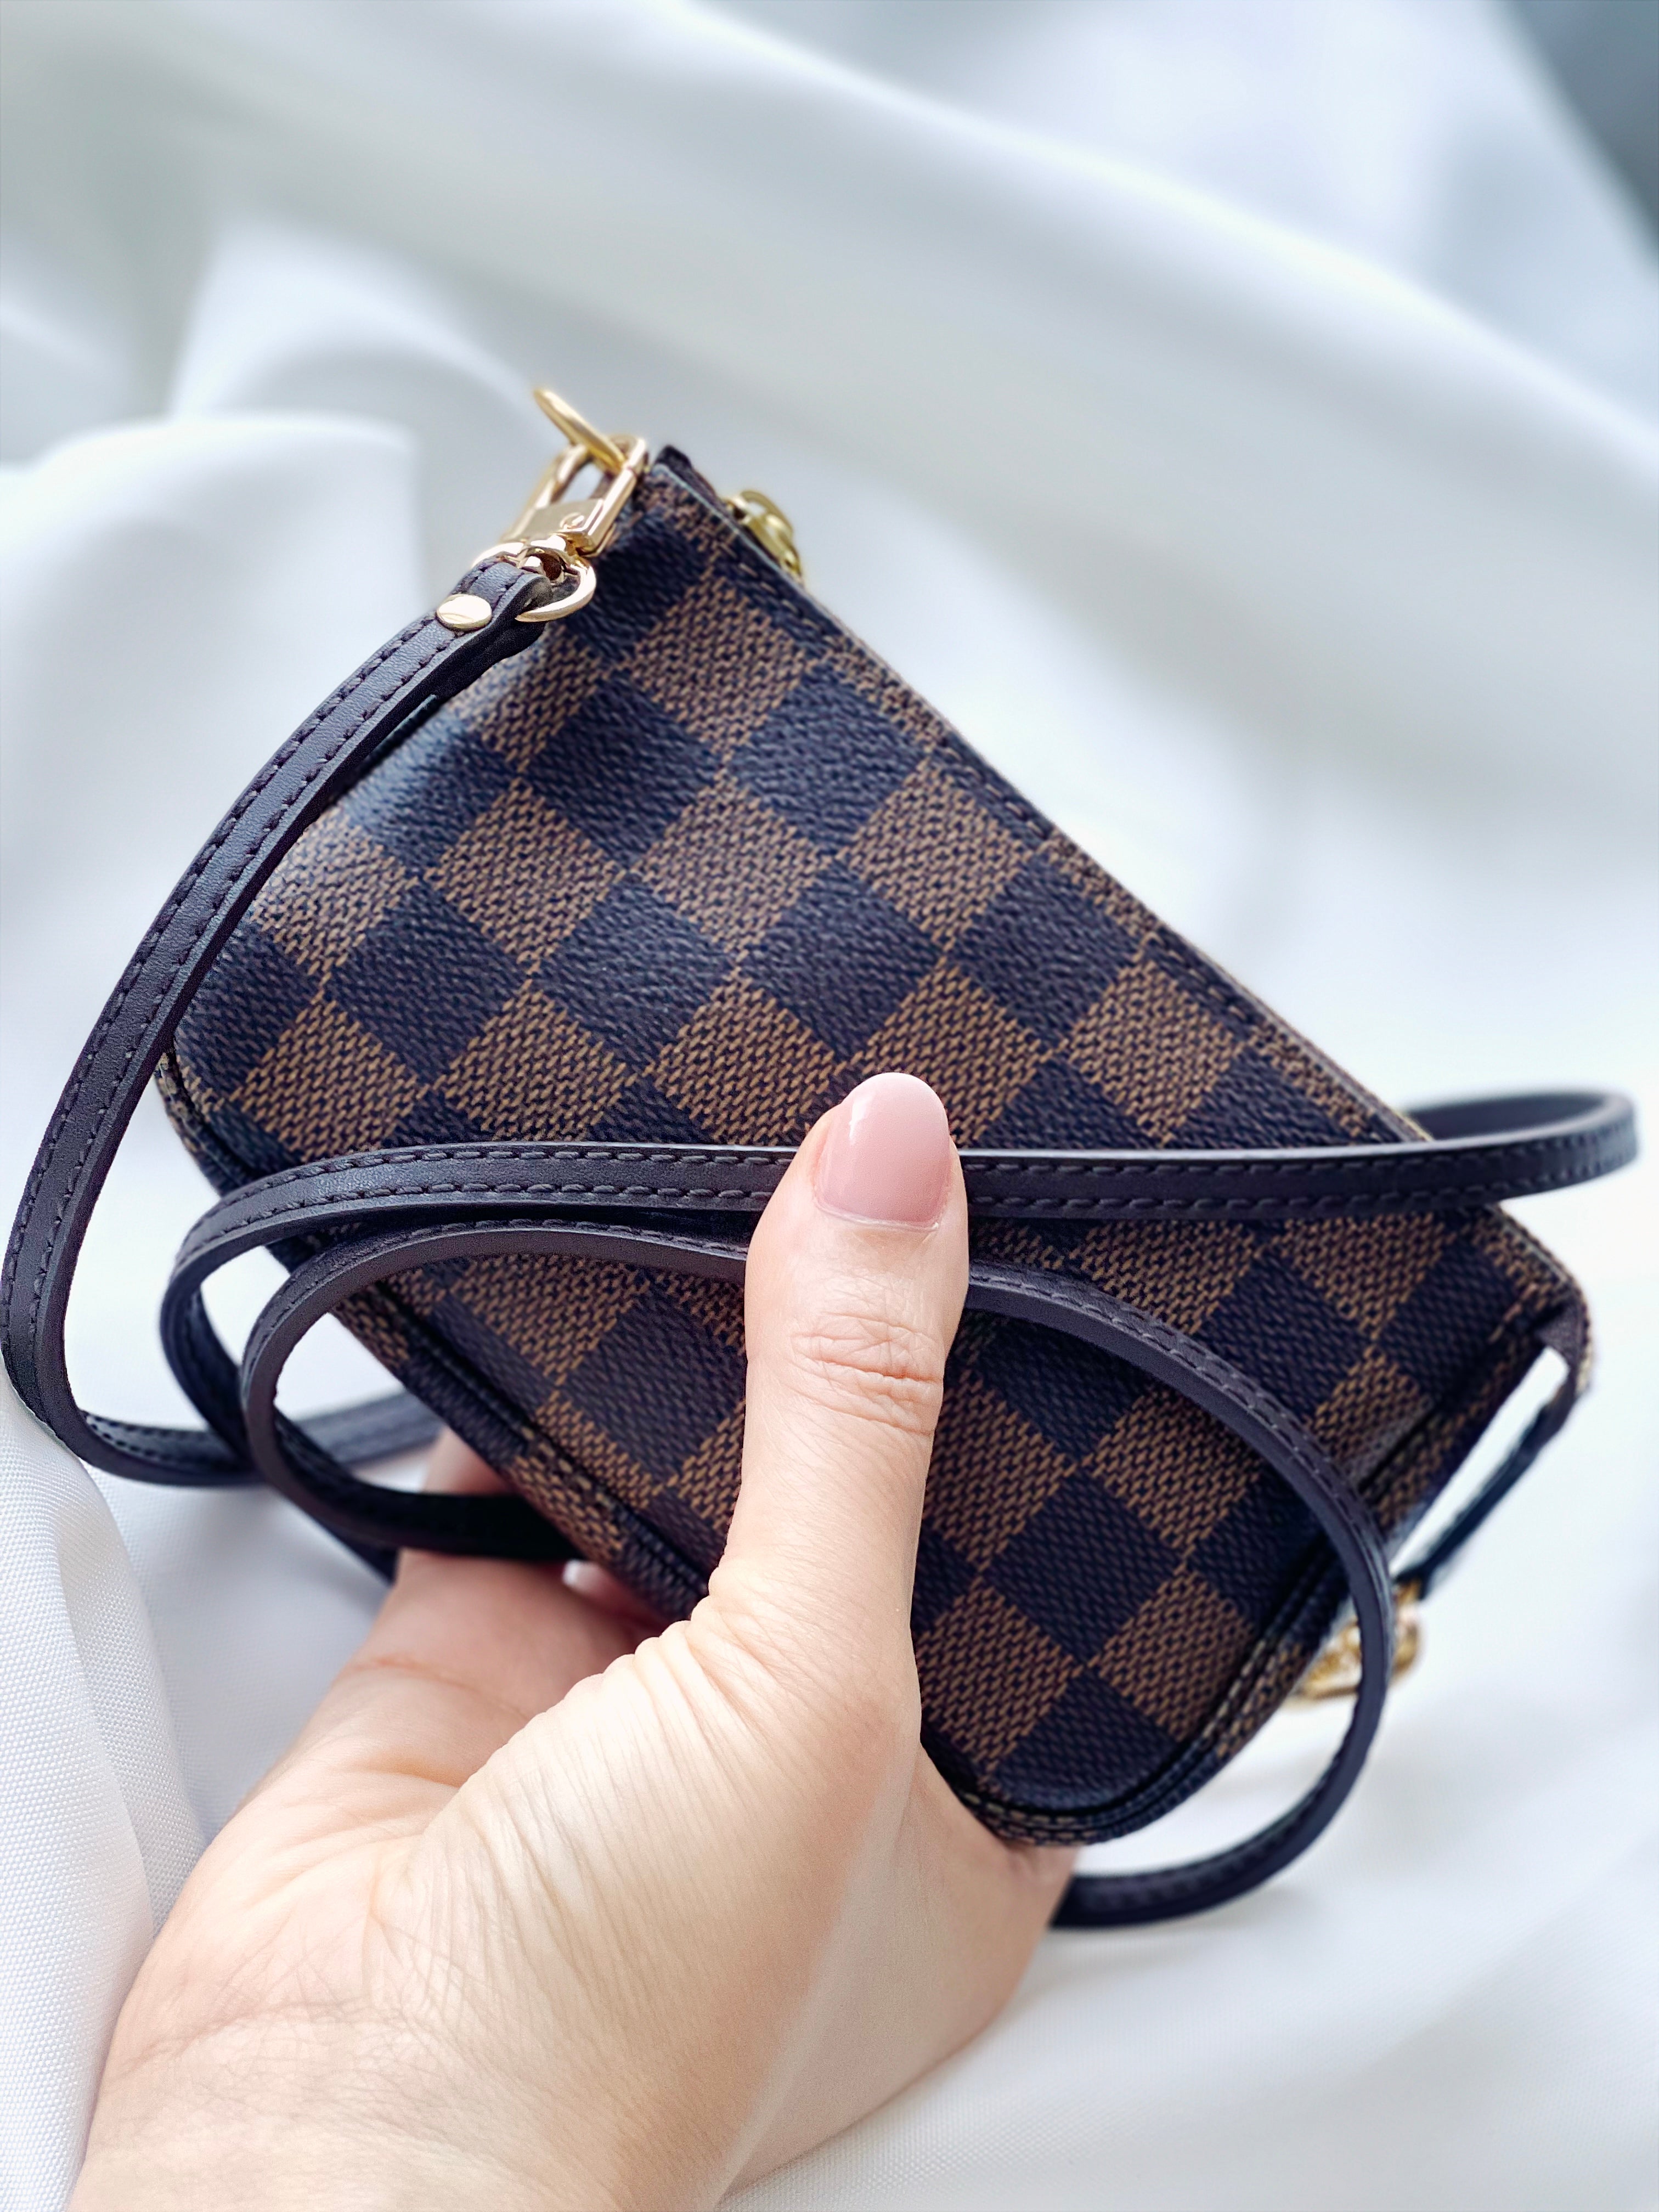 How To Spot A Fake Louis Vuitton  Authentic VS Fake Mini Pochette 